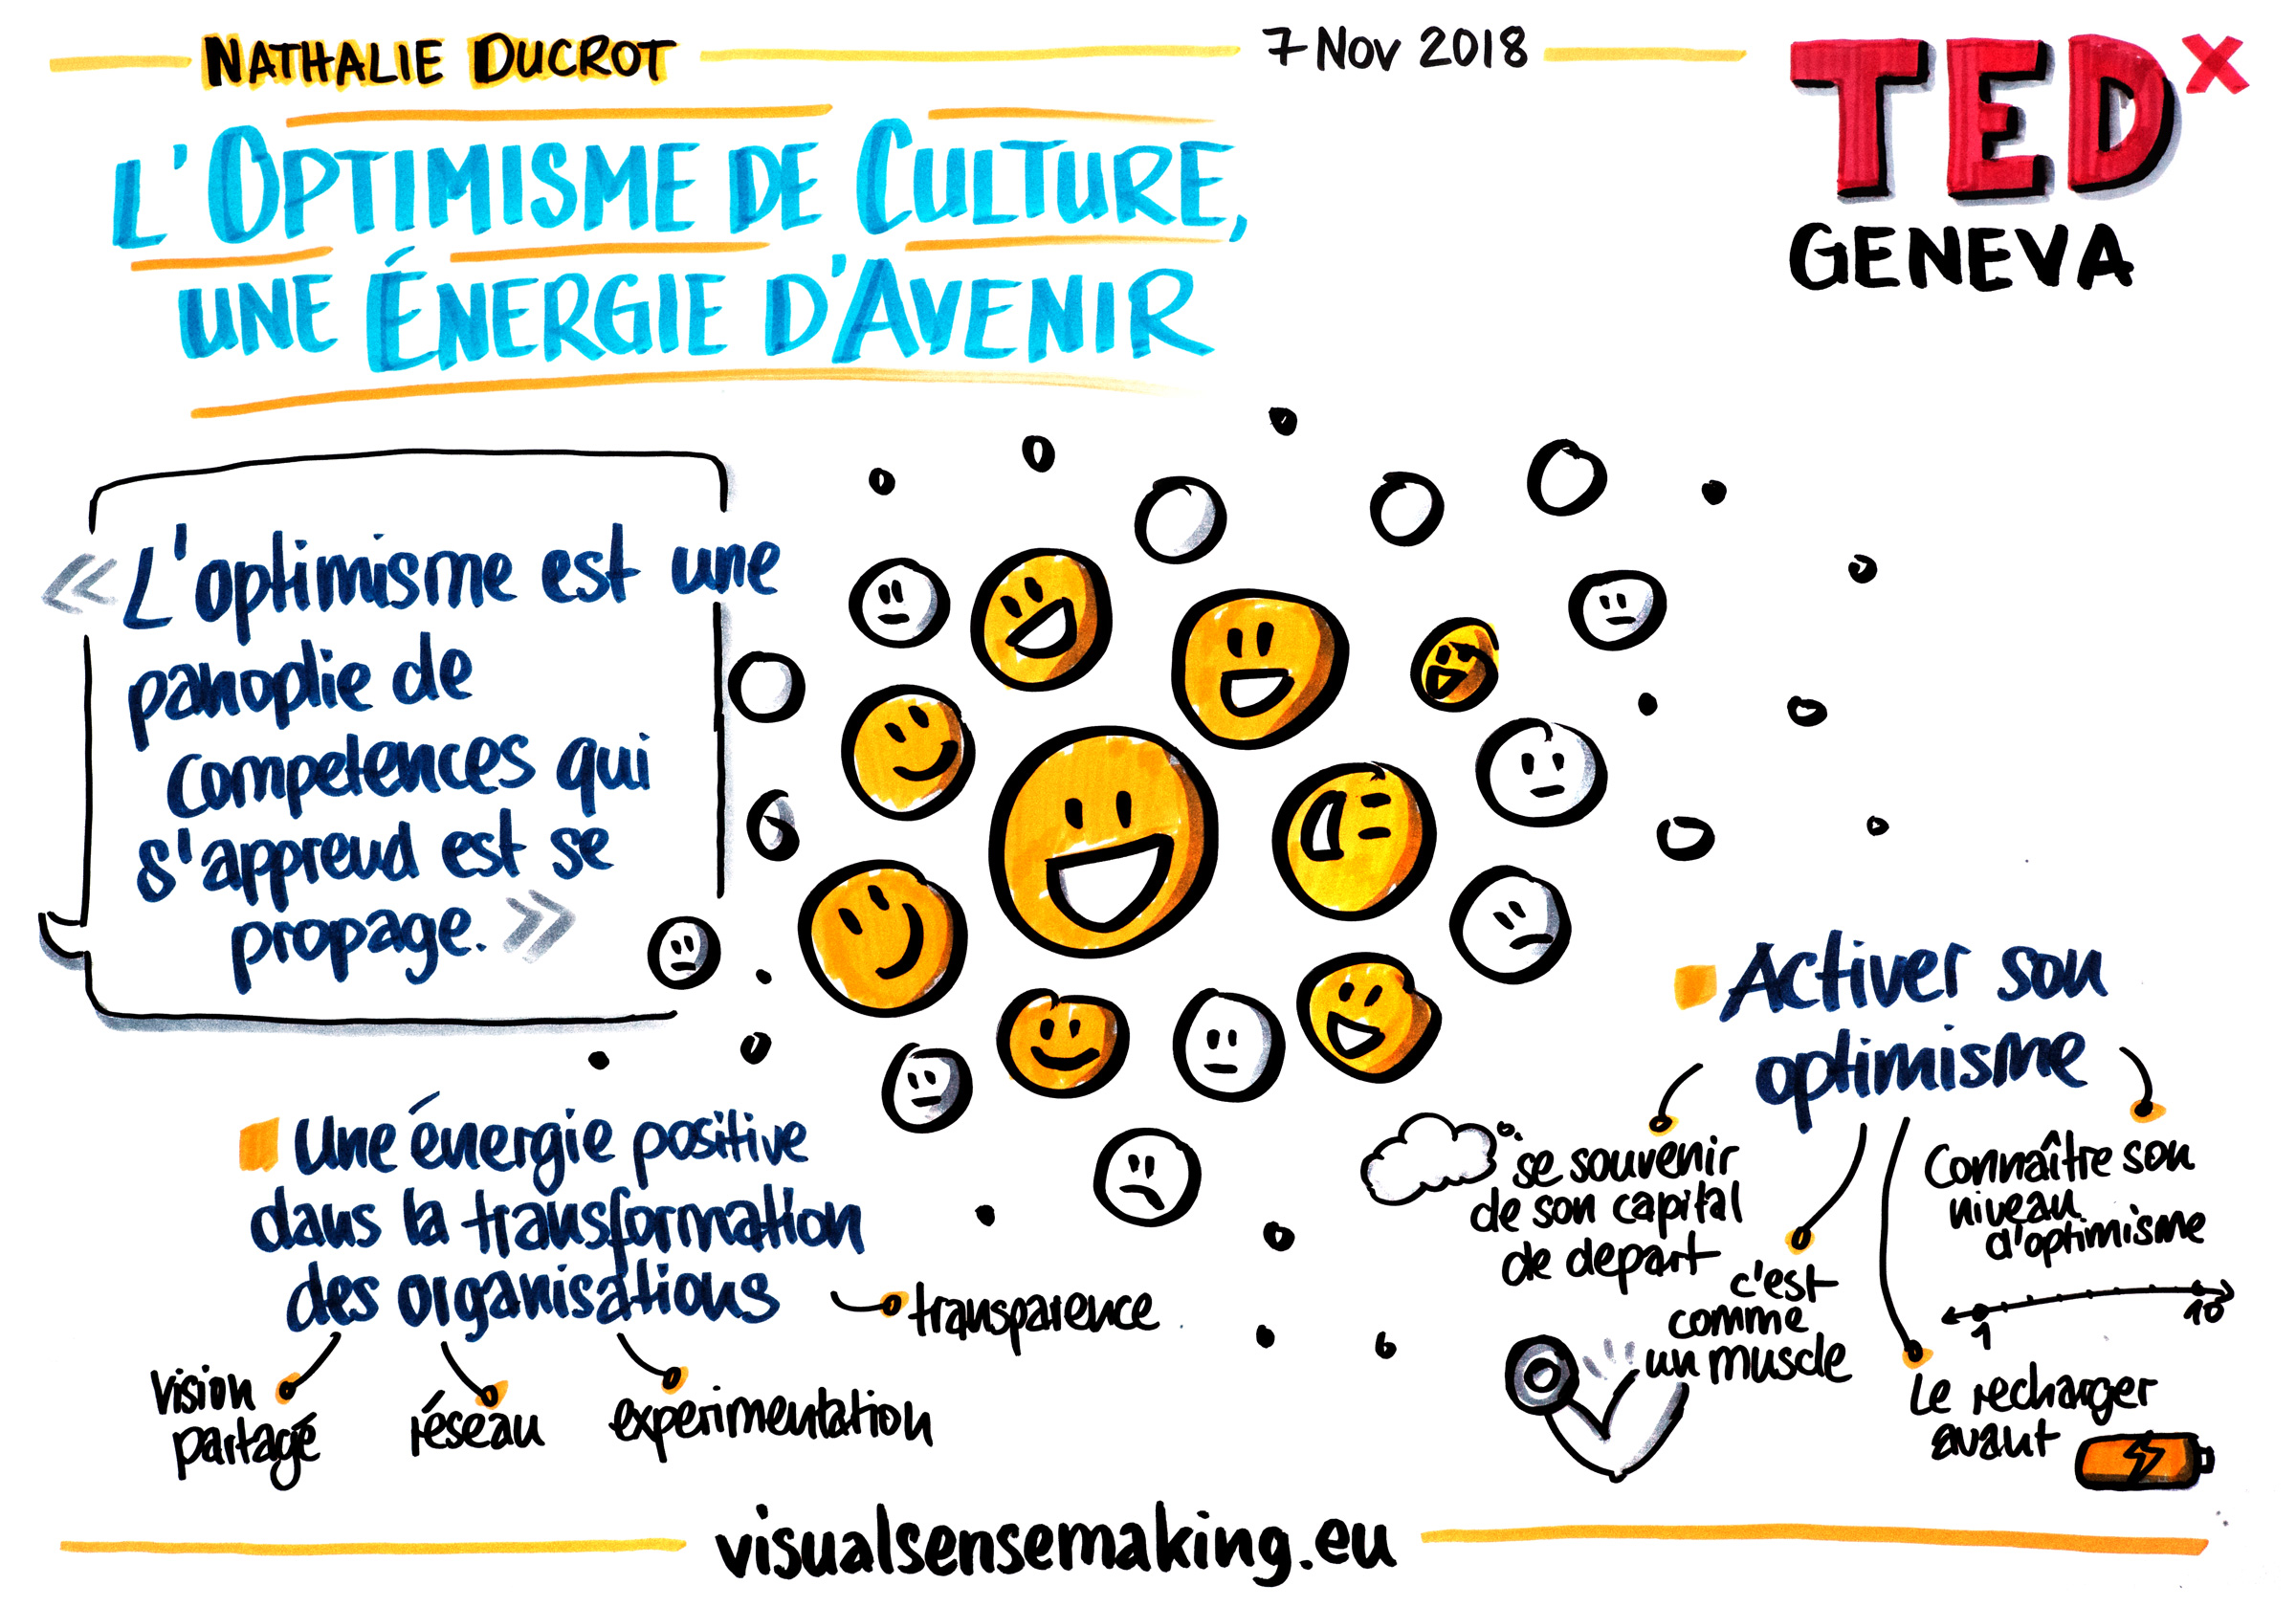 Visual summary of the talk 'L'optimisme de culture, une énergie d'avenir'